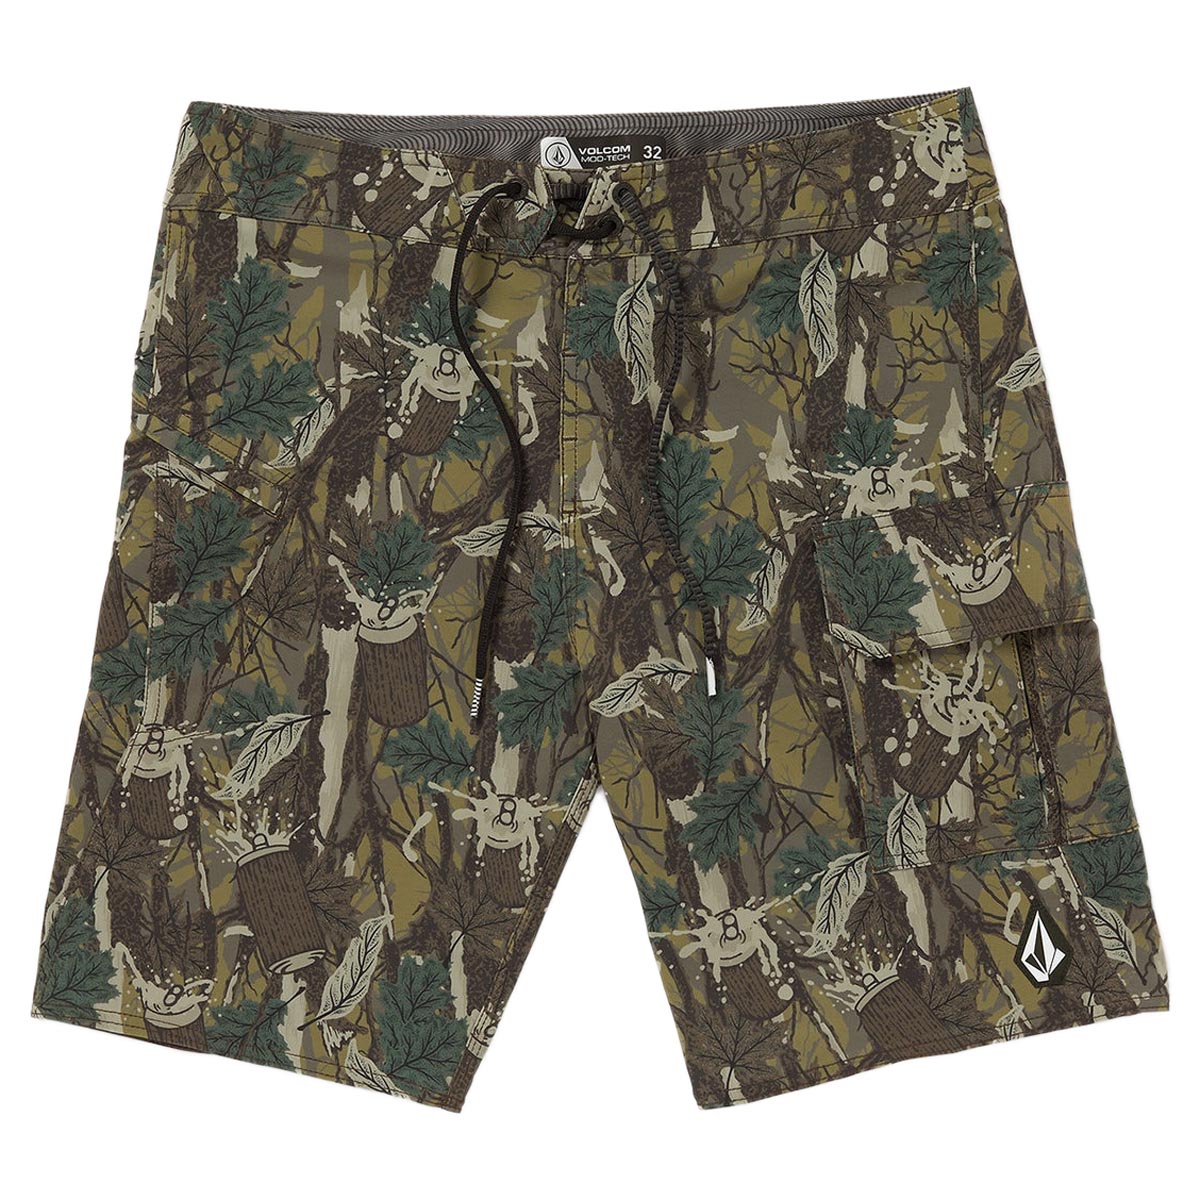 Volcom Stone Of July Mod 20 Board Shorts - Camouflage image 1